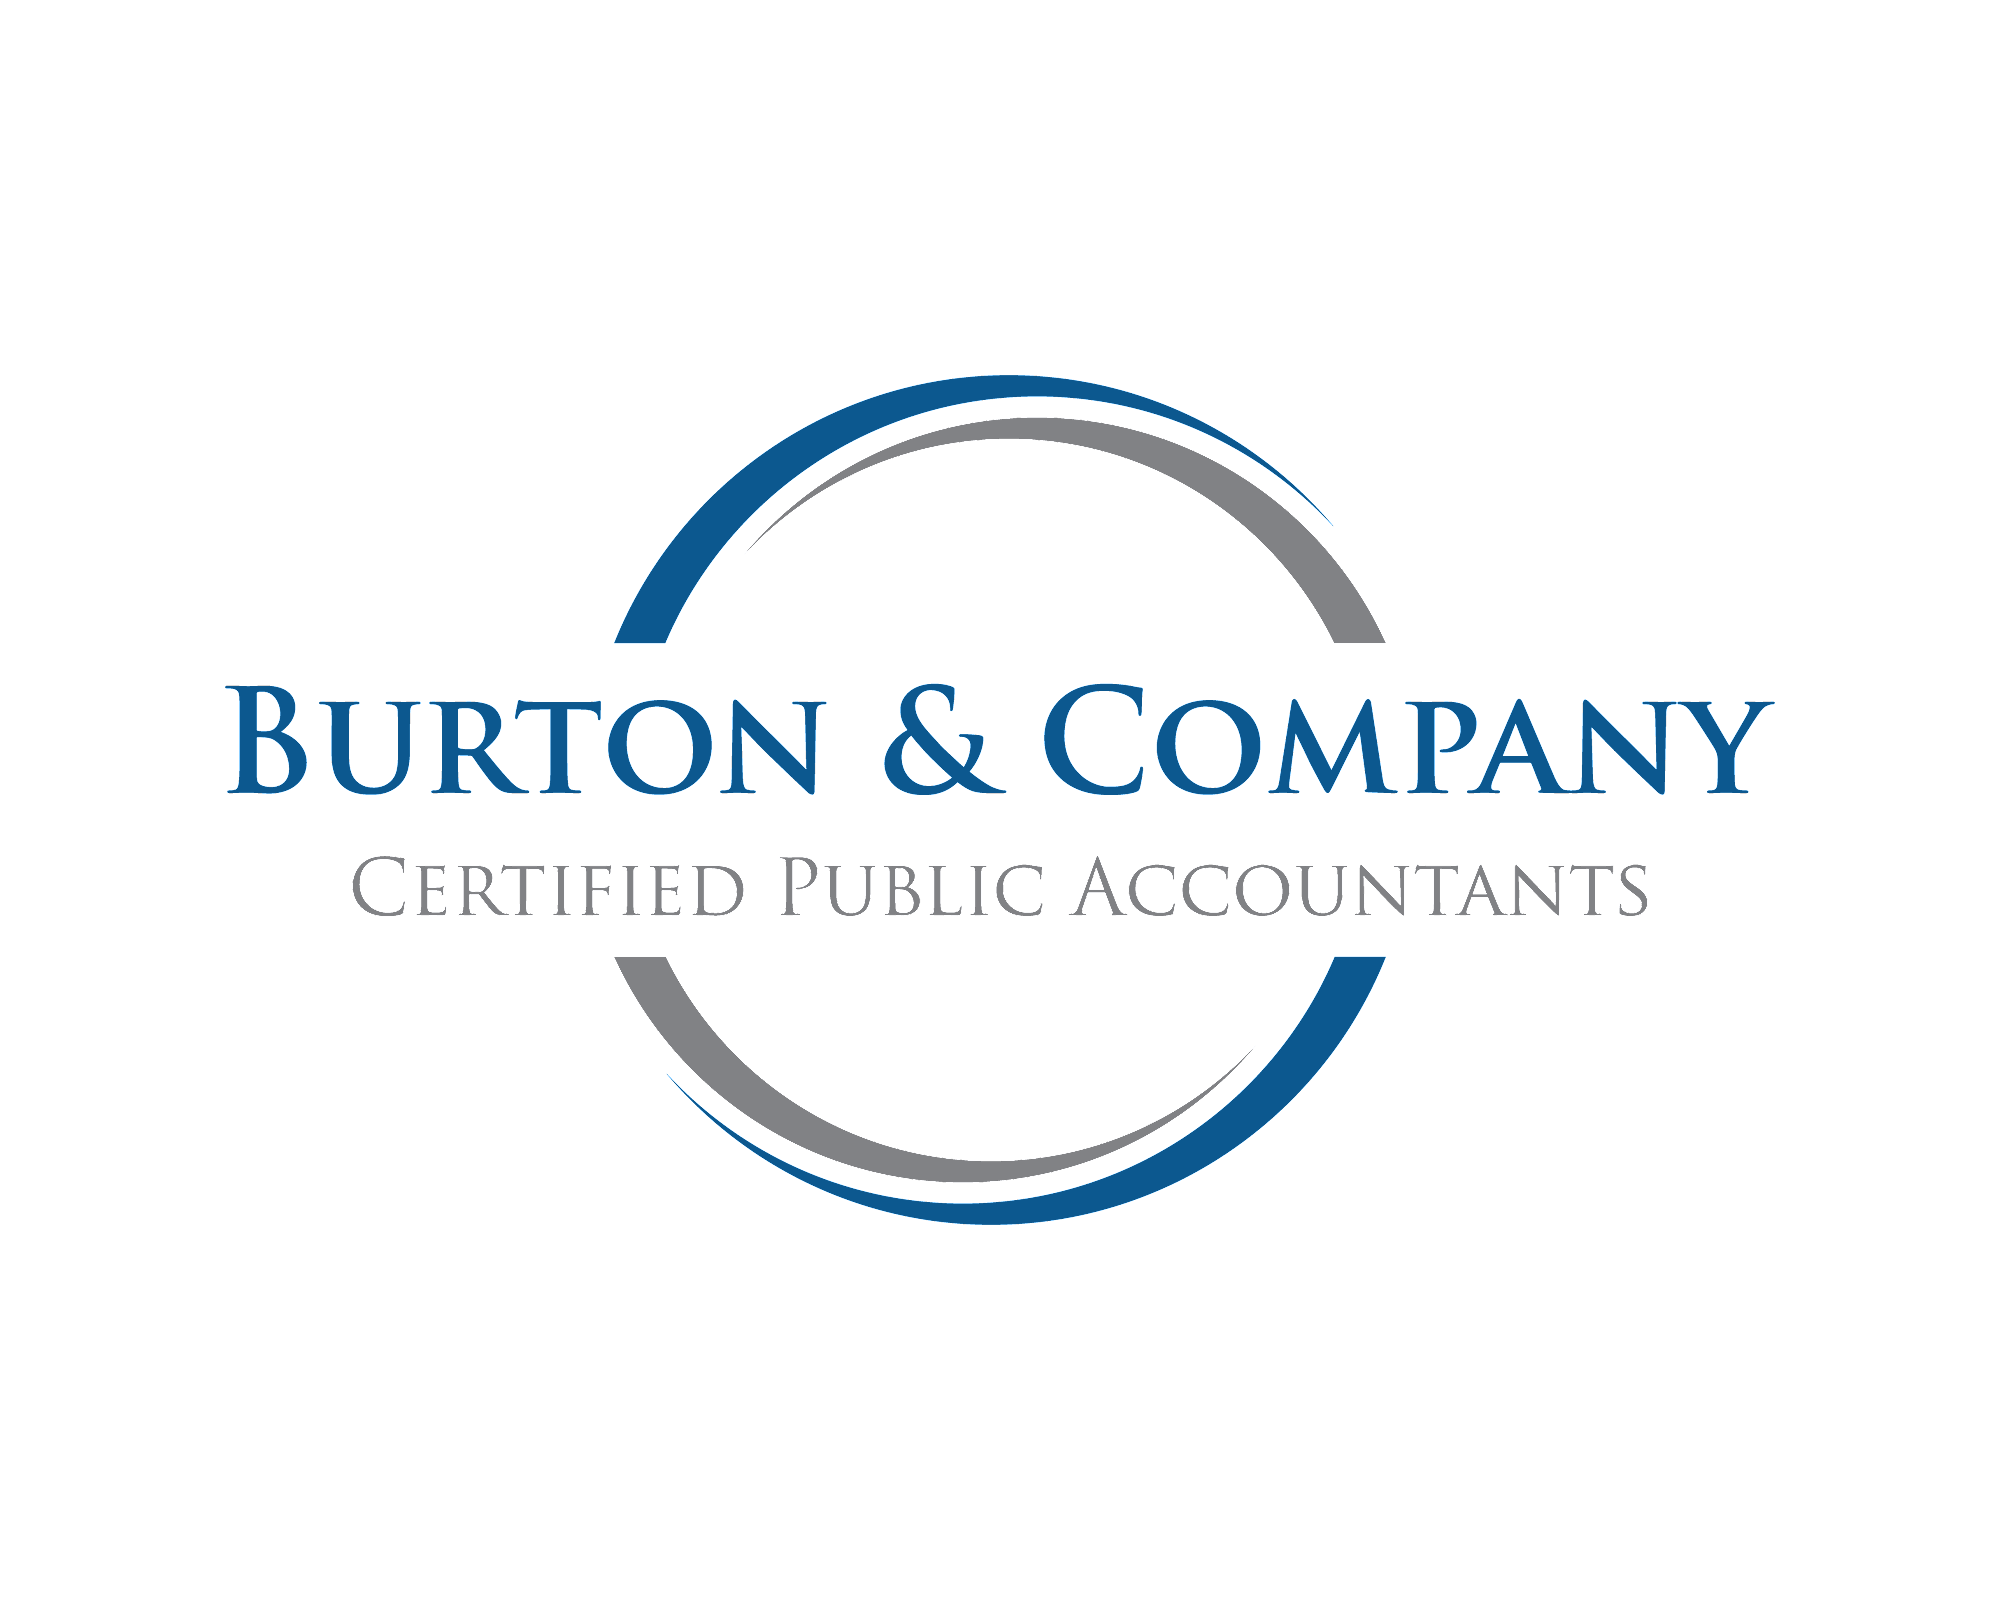 Burton & Company, Certified Public Accountants